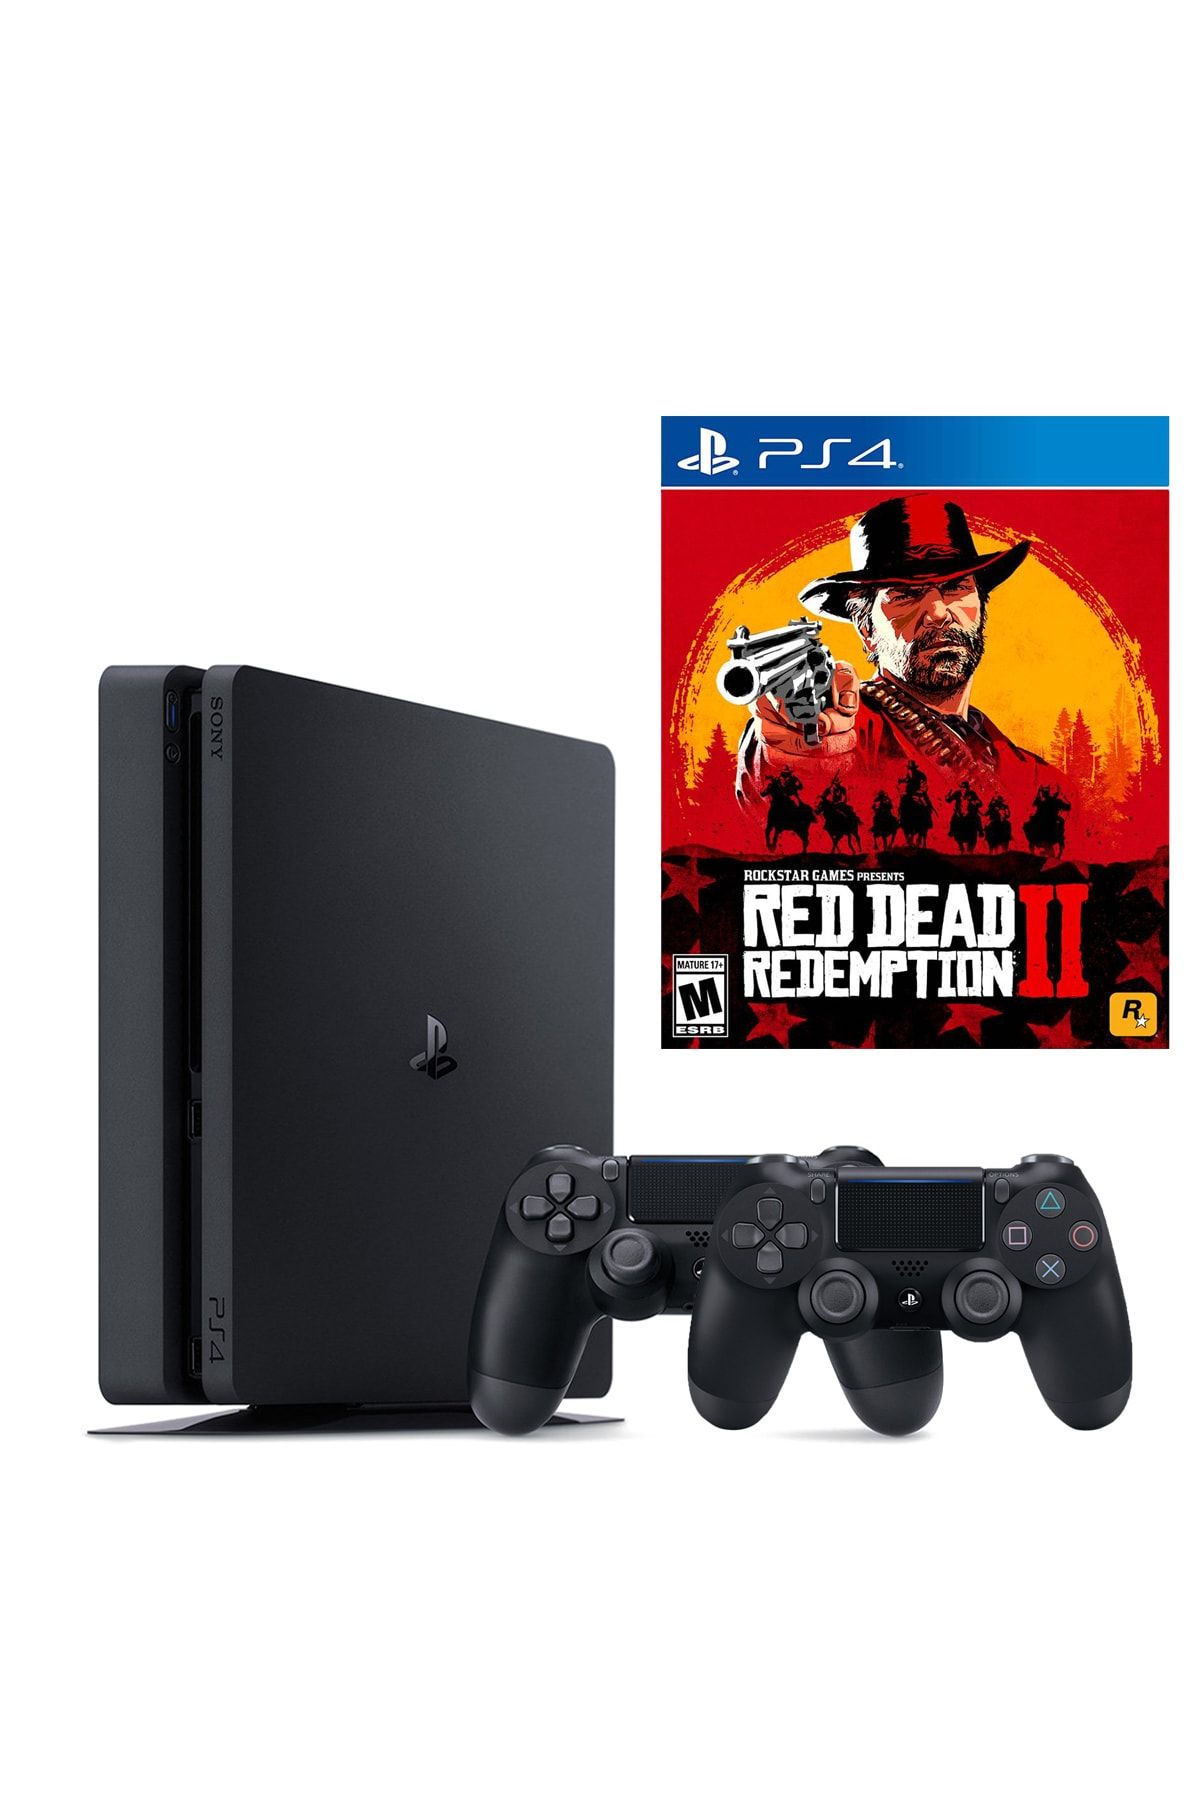 Sony Playstation 4 Slim 500 GB + 2. PS4 Kol + PS4 Red Dead Redemption 2 (Eurasia Garantili)